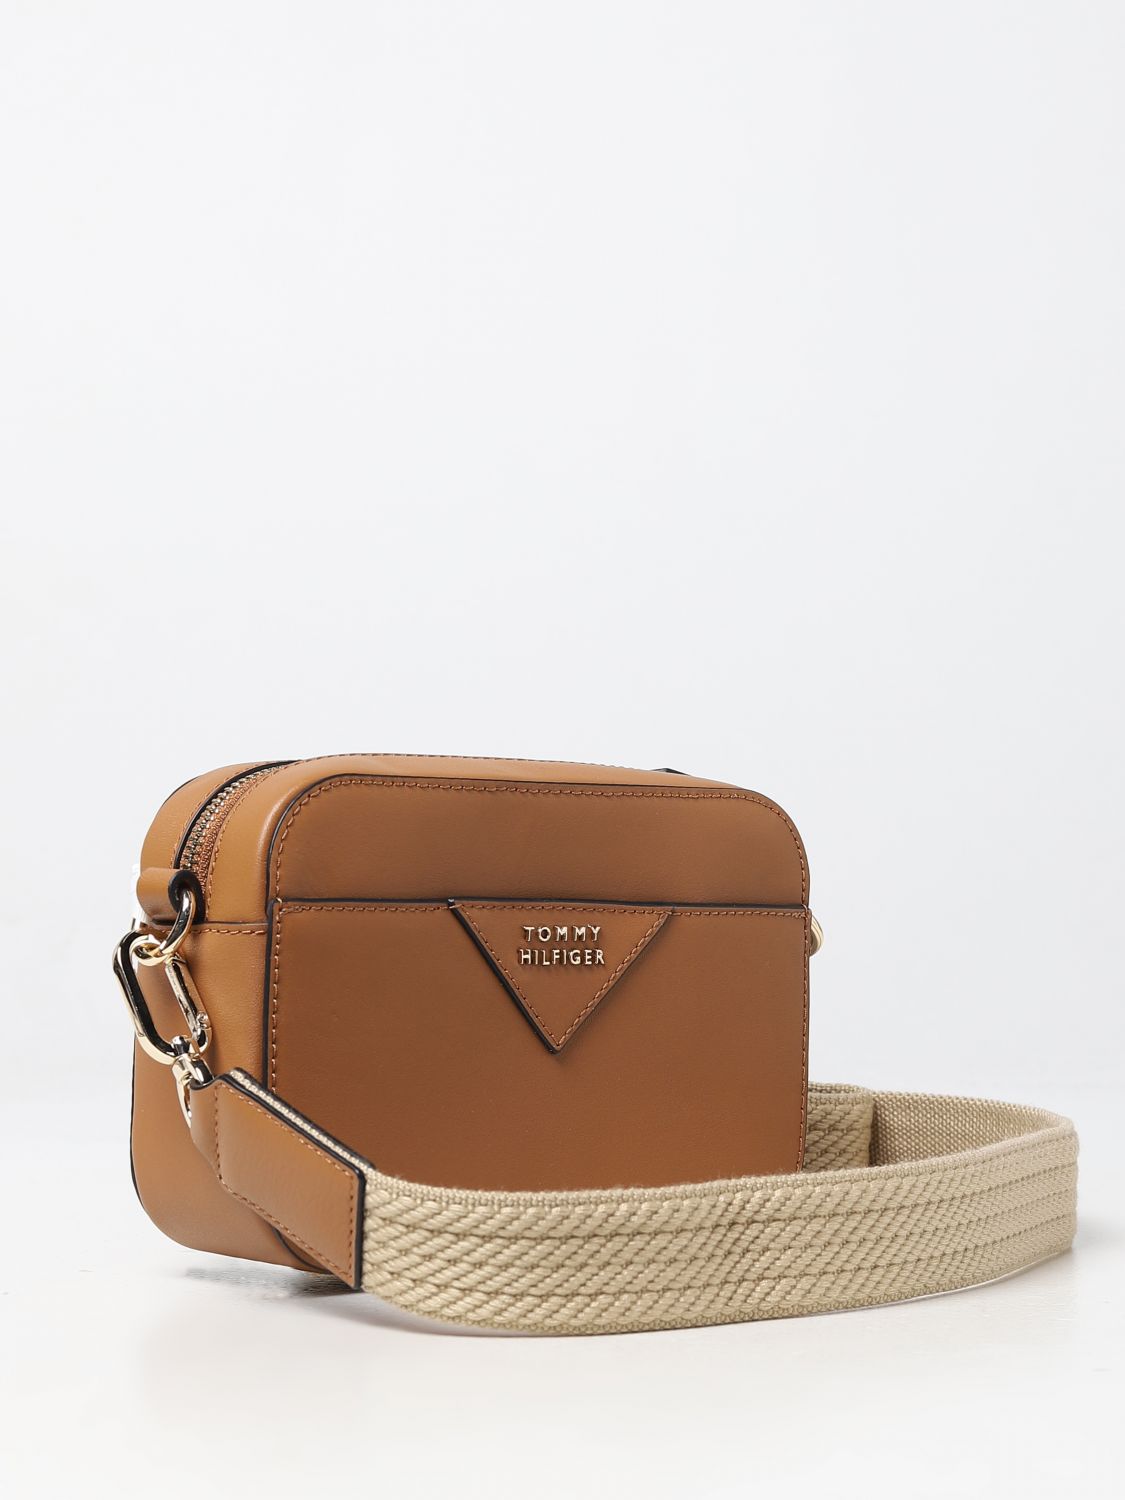 TOMMY HILFIGER: mini bag for woman - Leather | Tommy Hilfiger mini bag ...